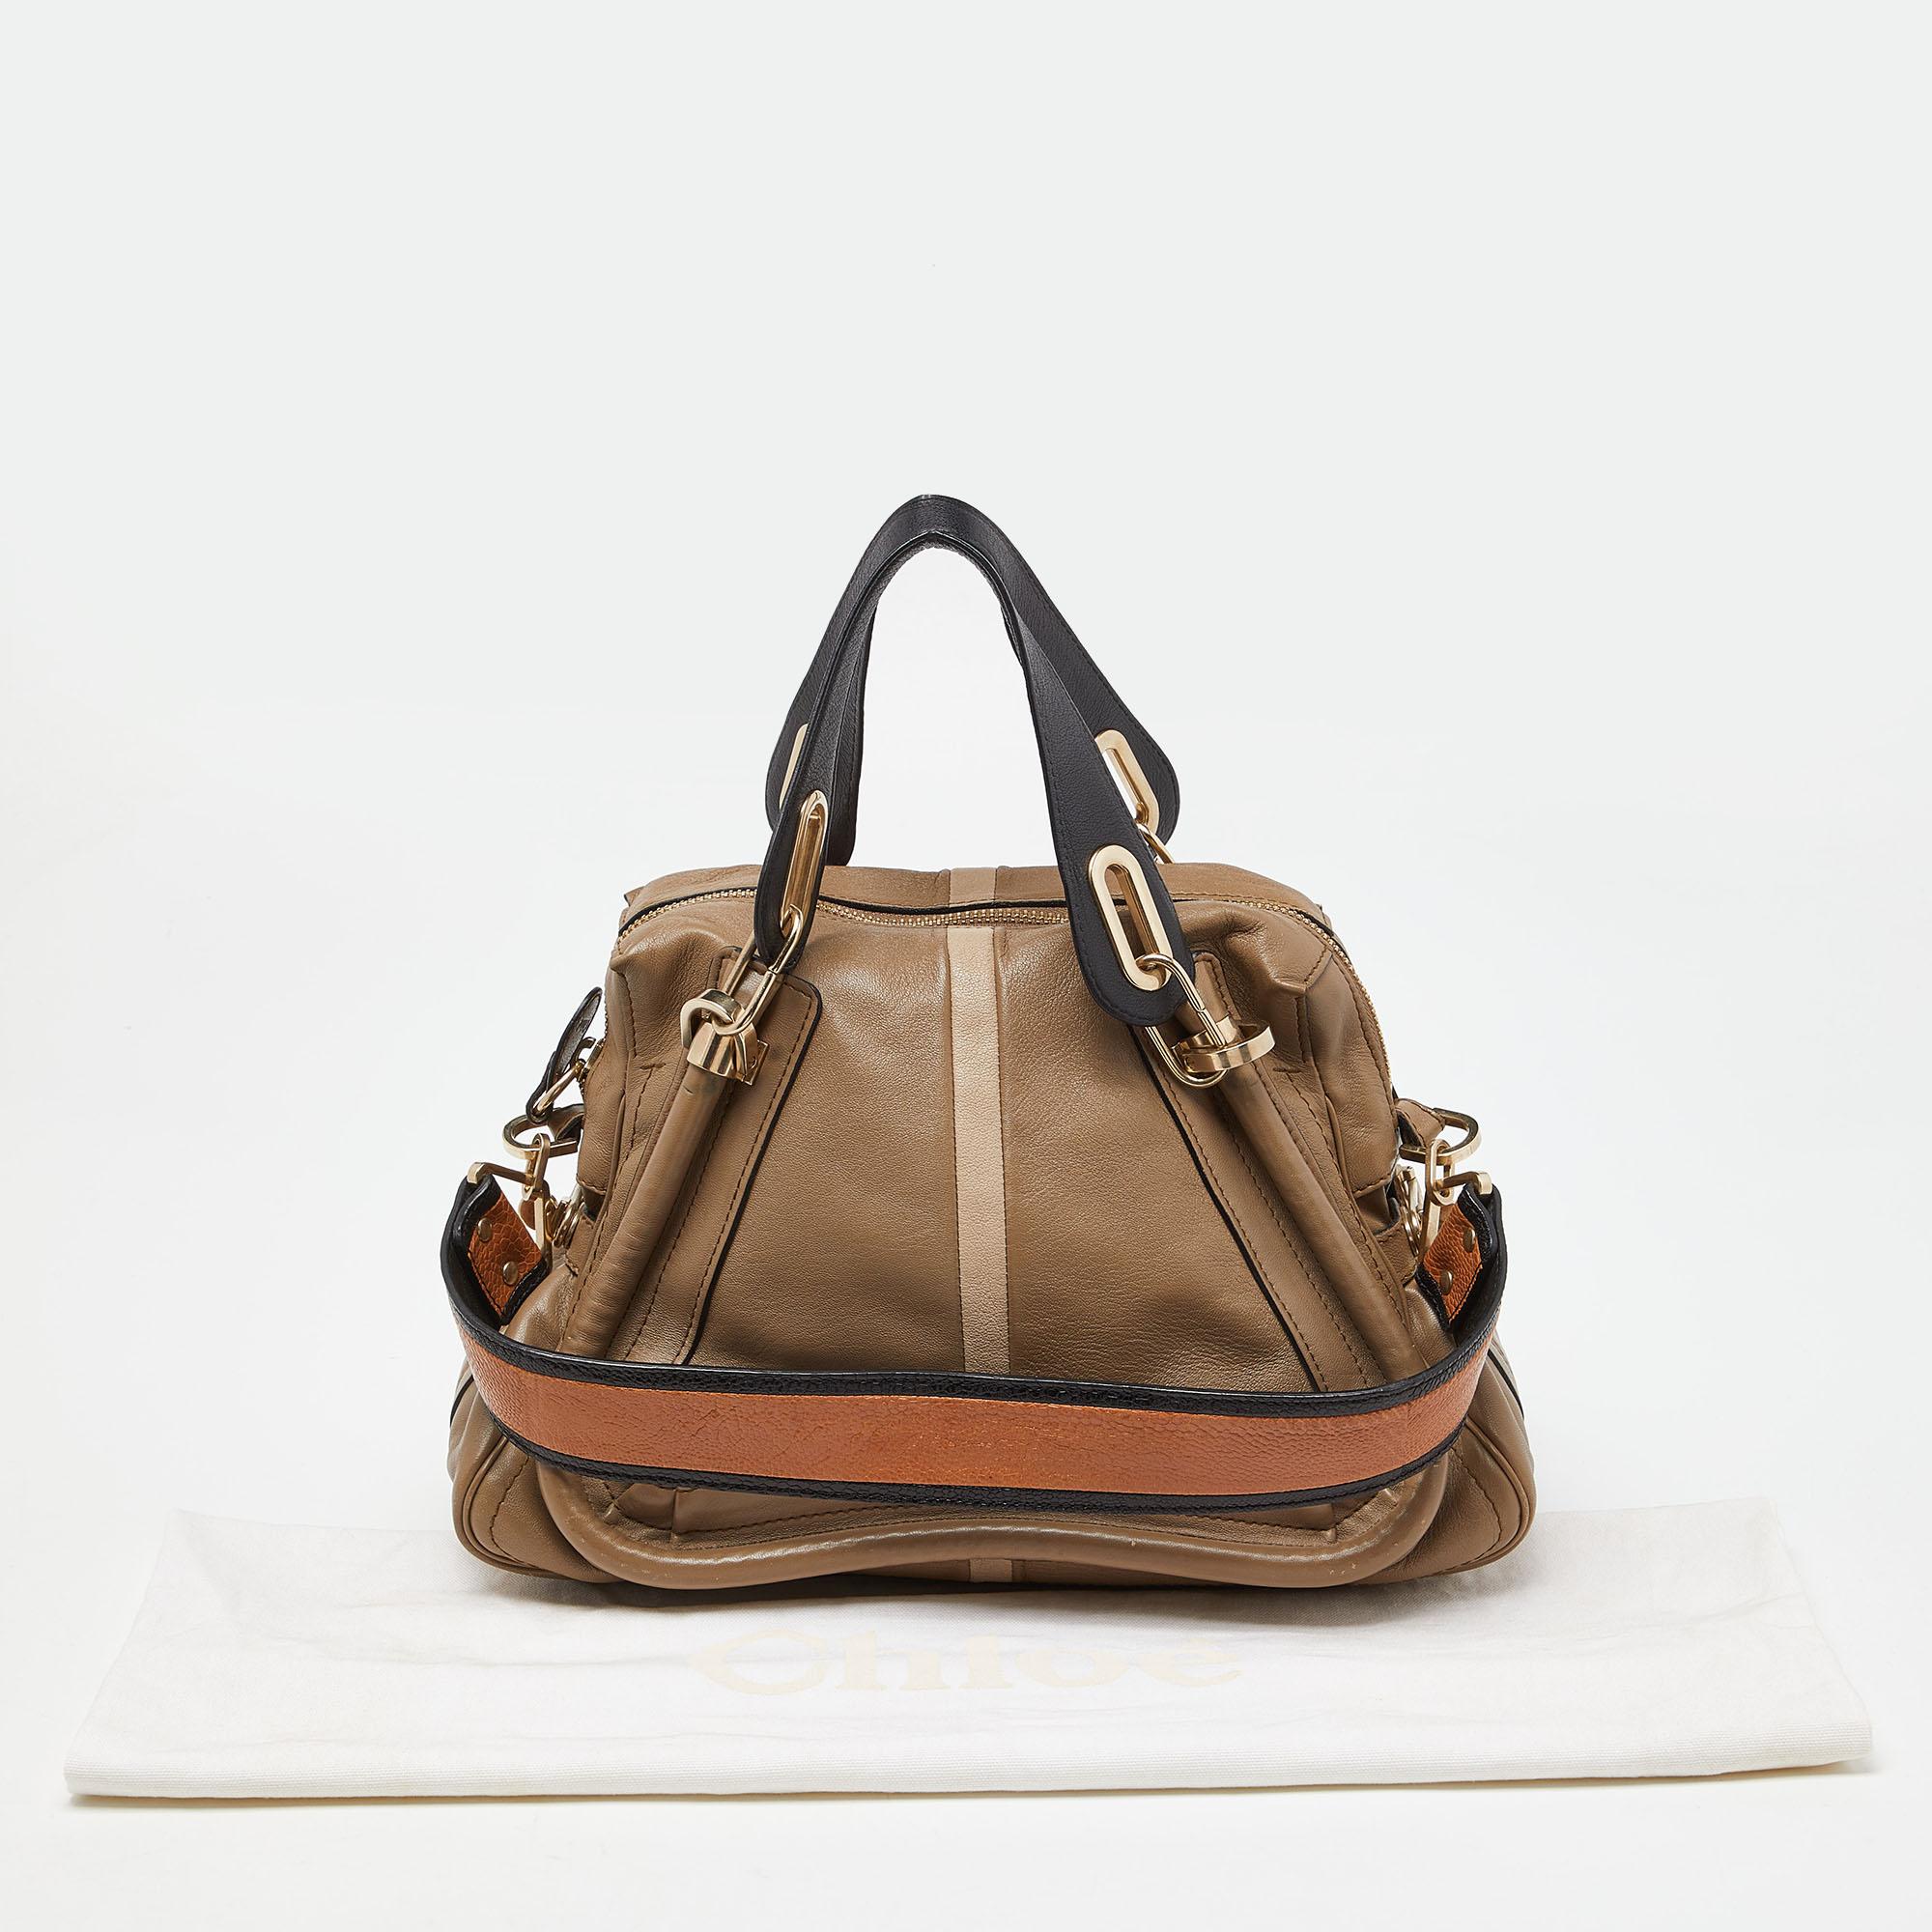 Chloe Beige/Black Leather Medium Paraty Handbag For Sale 7